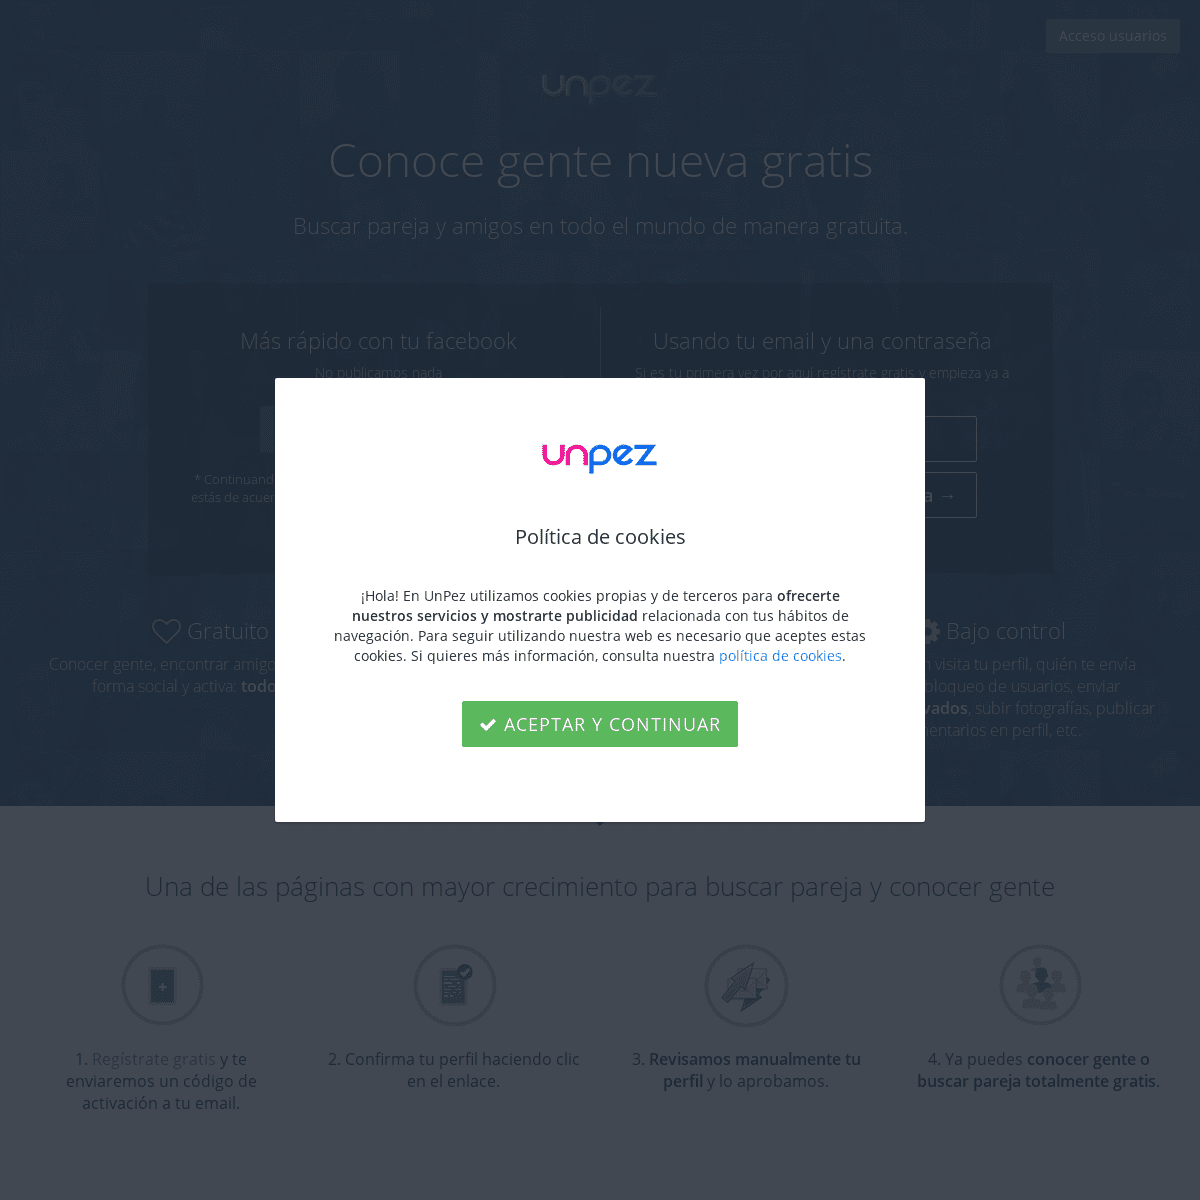 A complete backup of unpez.com